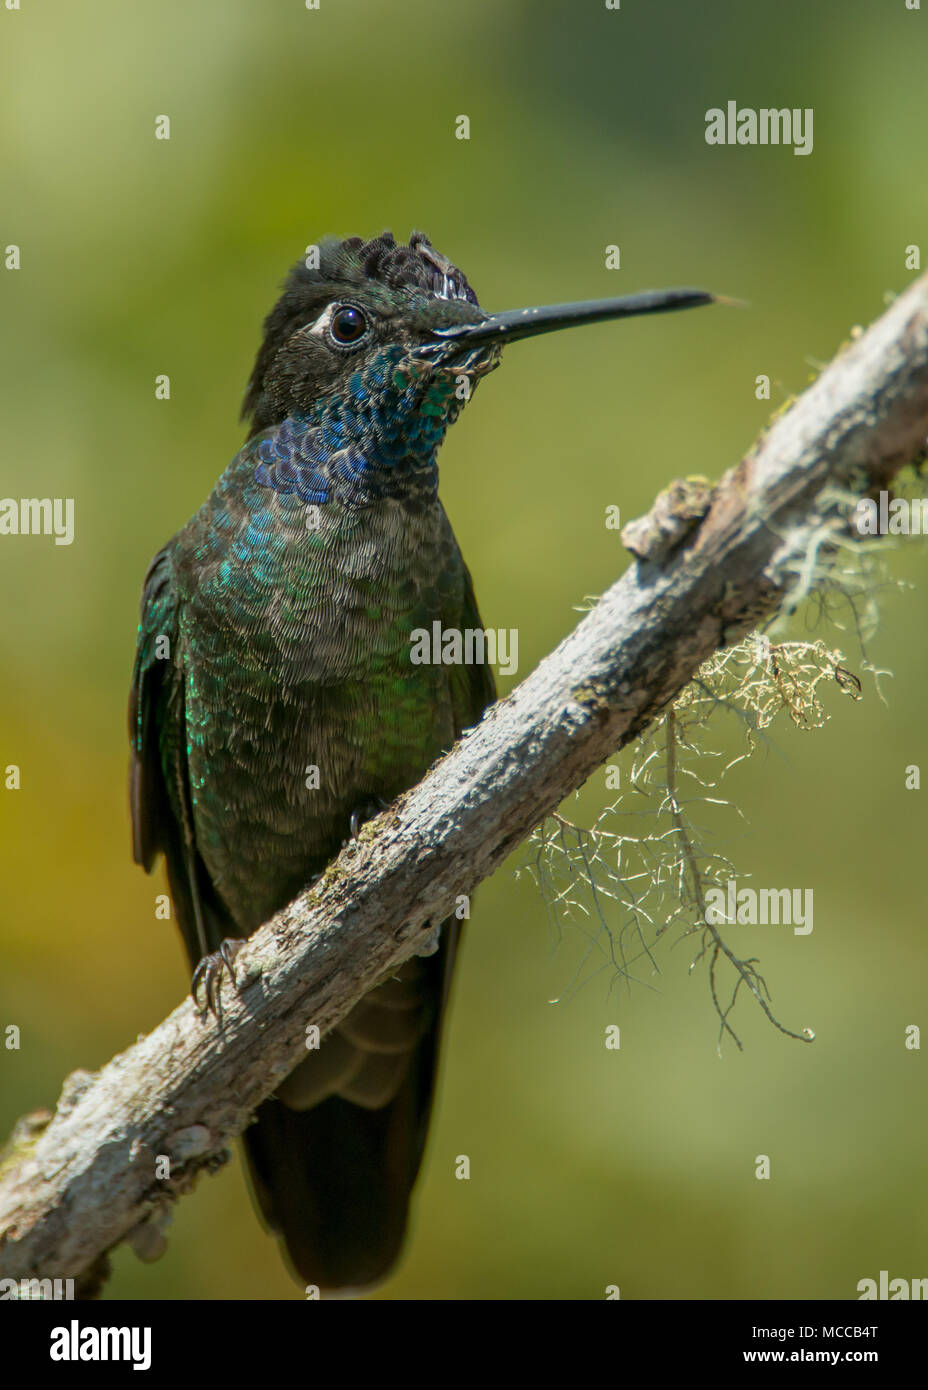 Magníficos colibríes fotografías e imágenes de alta resolución - Alamy